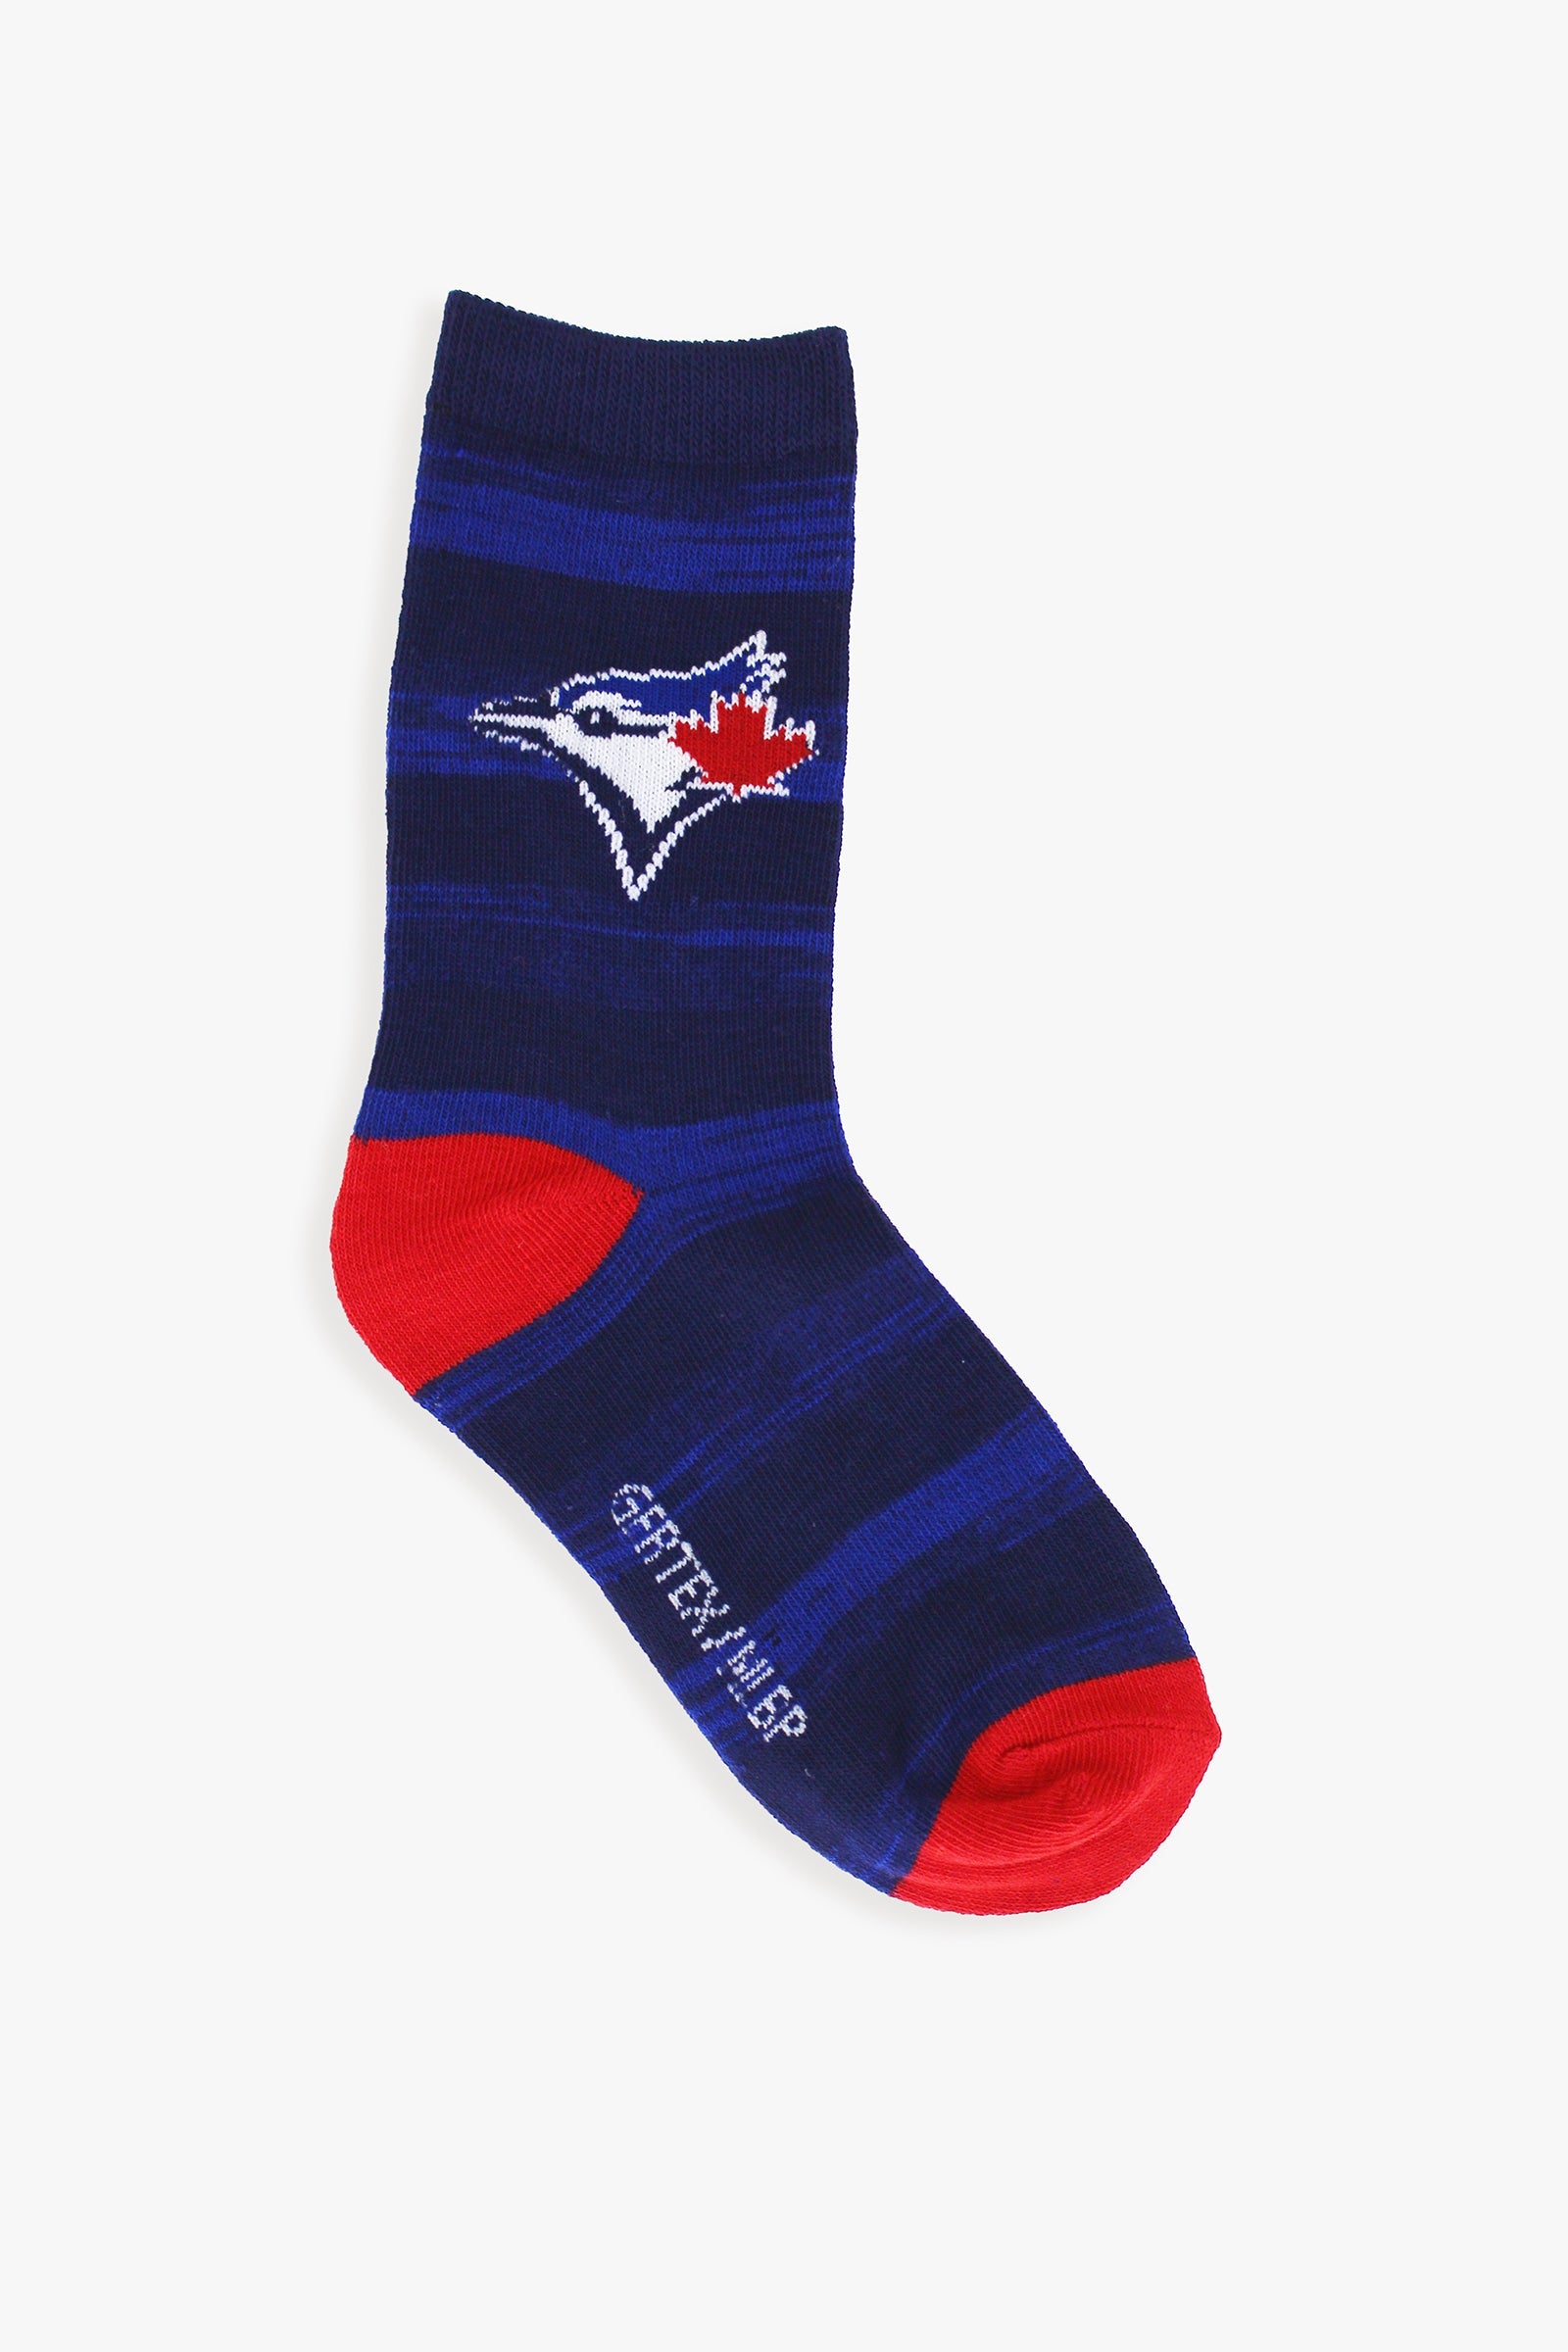 Gertex MLB Toronto Blue Jays Youth Boys 3-Pack Crew Socks